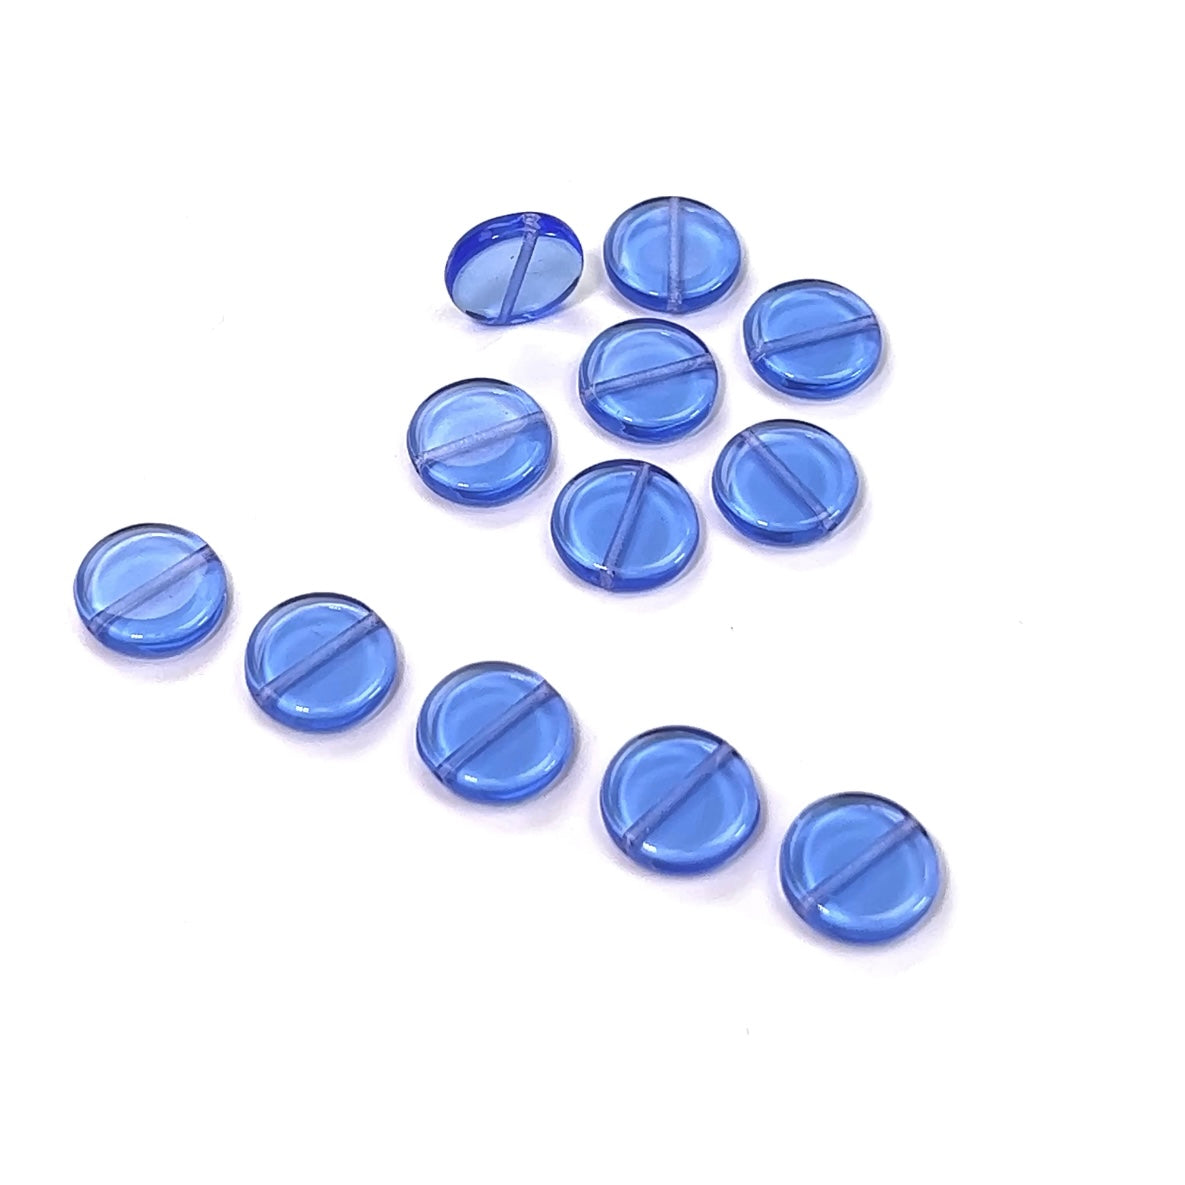 Czech Glass Druk Beads in size 12mm, Flat Disc, Sapphire blue color, 50pcs, J058